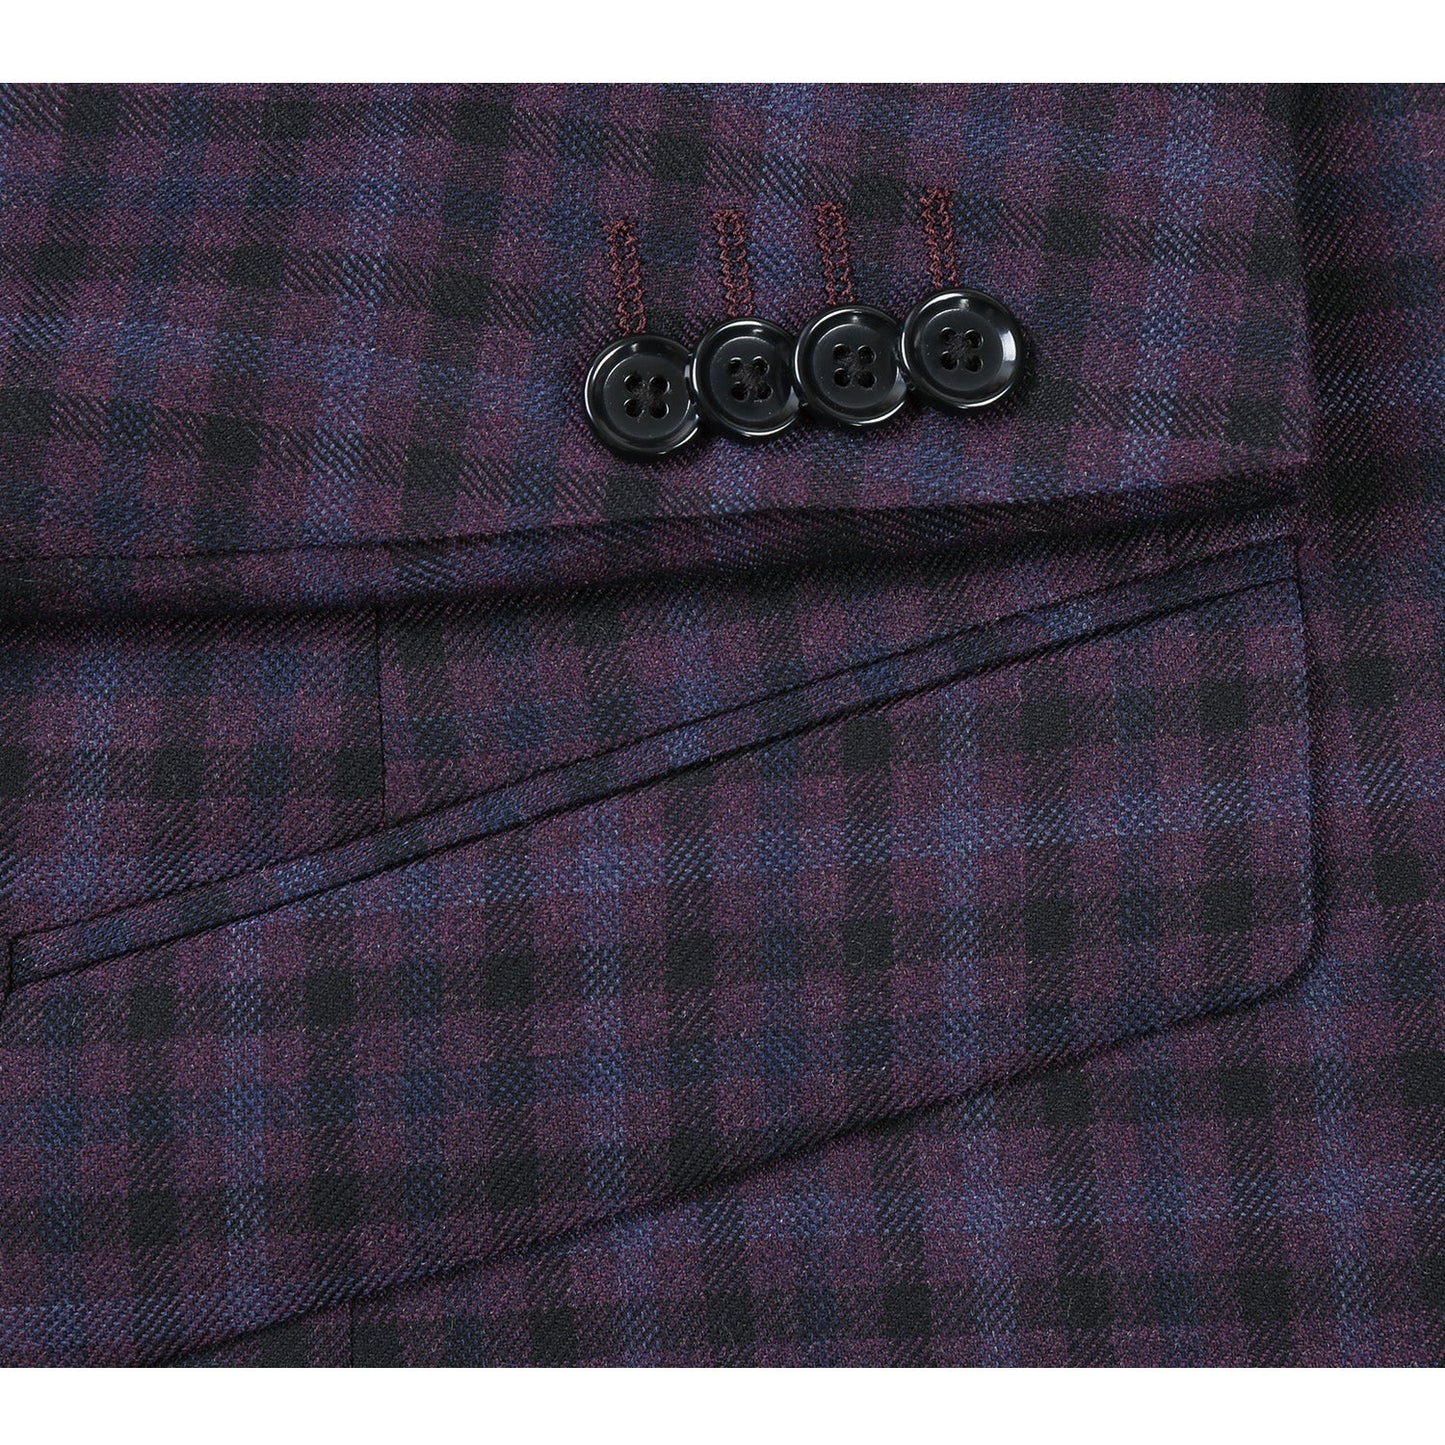 563-9 Men's Slim Fit Wool Blend Burgundy/Blue/Black Checked Sport Coat